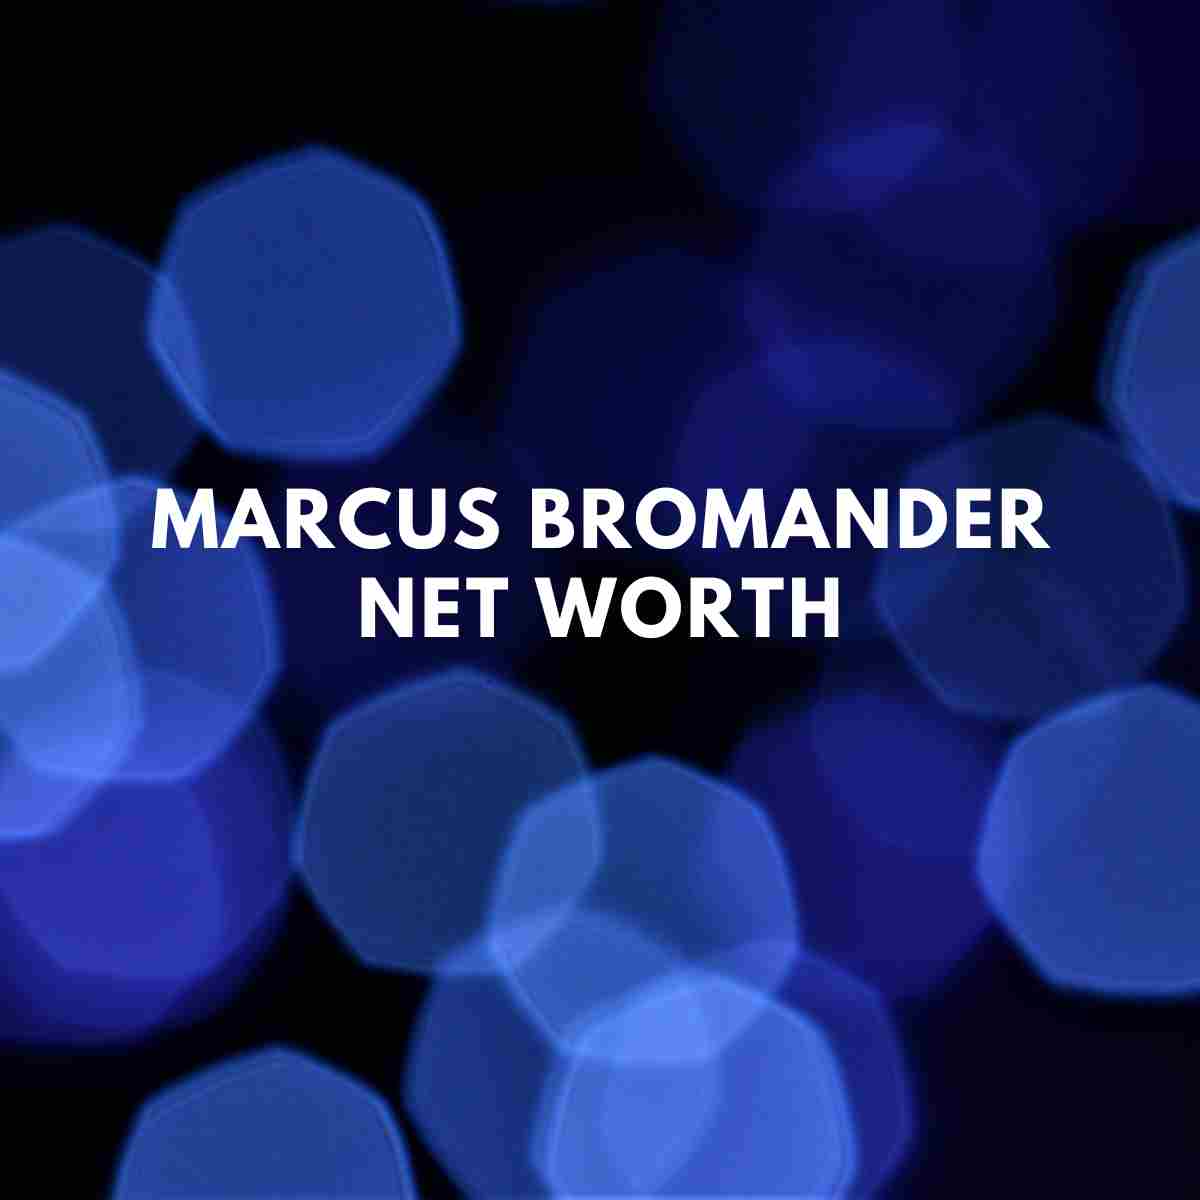 Marcus Bromander net worth